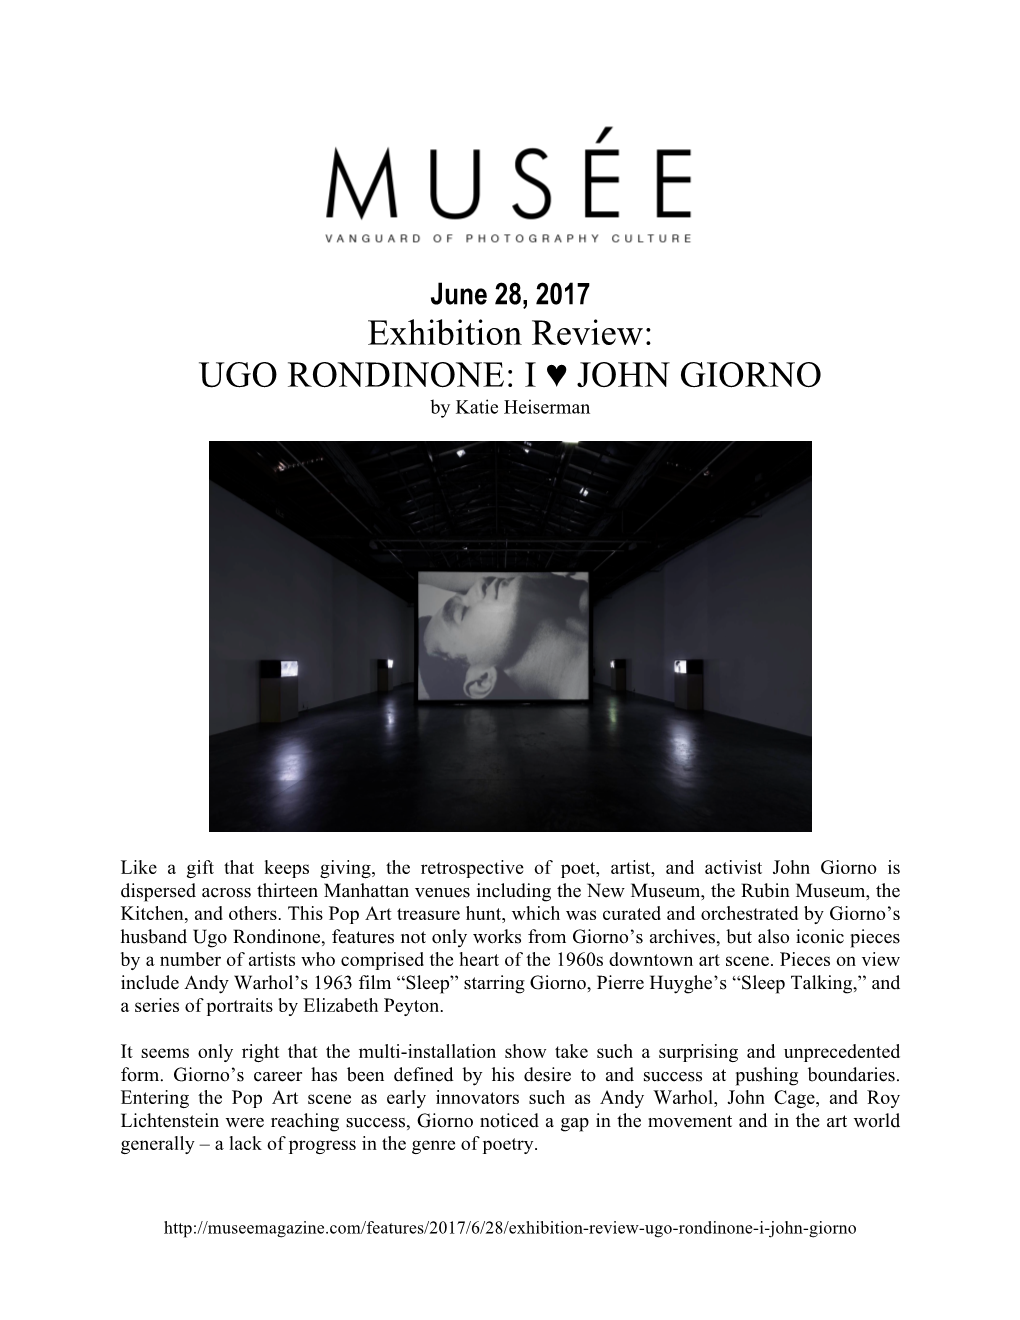 Exhibition Review: UGO RONDINONE: I JOHN GIORNO